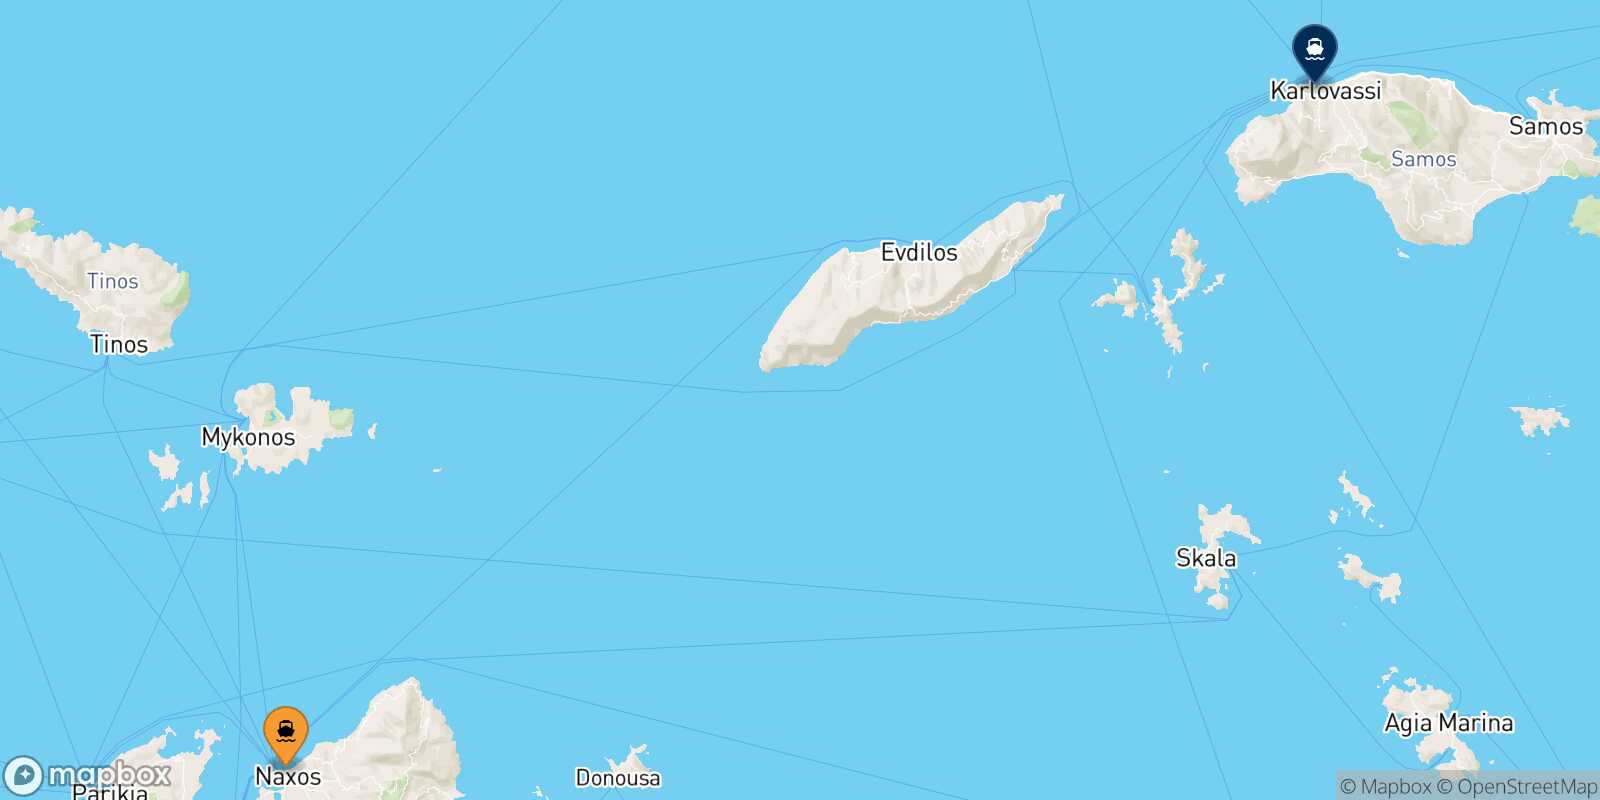 Carte des traverséesNaxos Karlovassi (Samos)